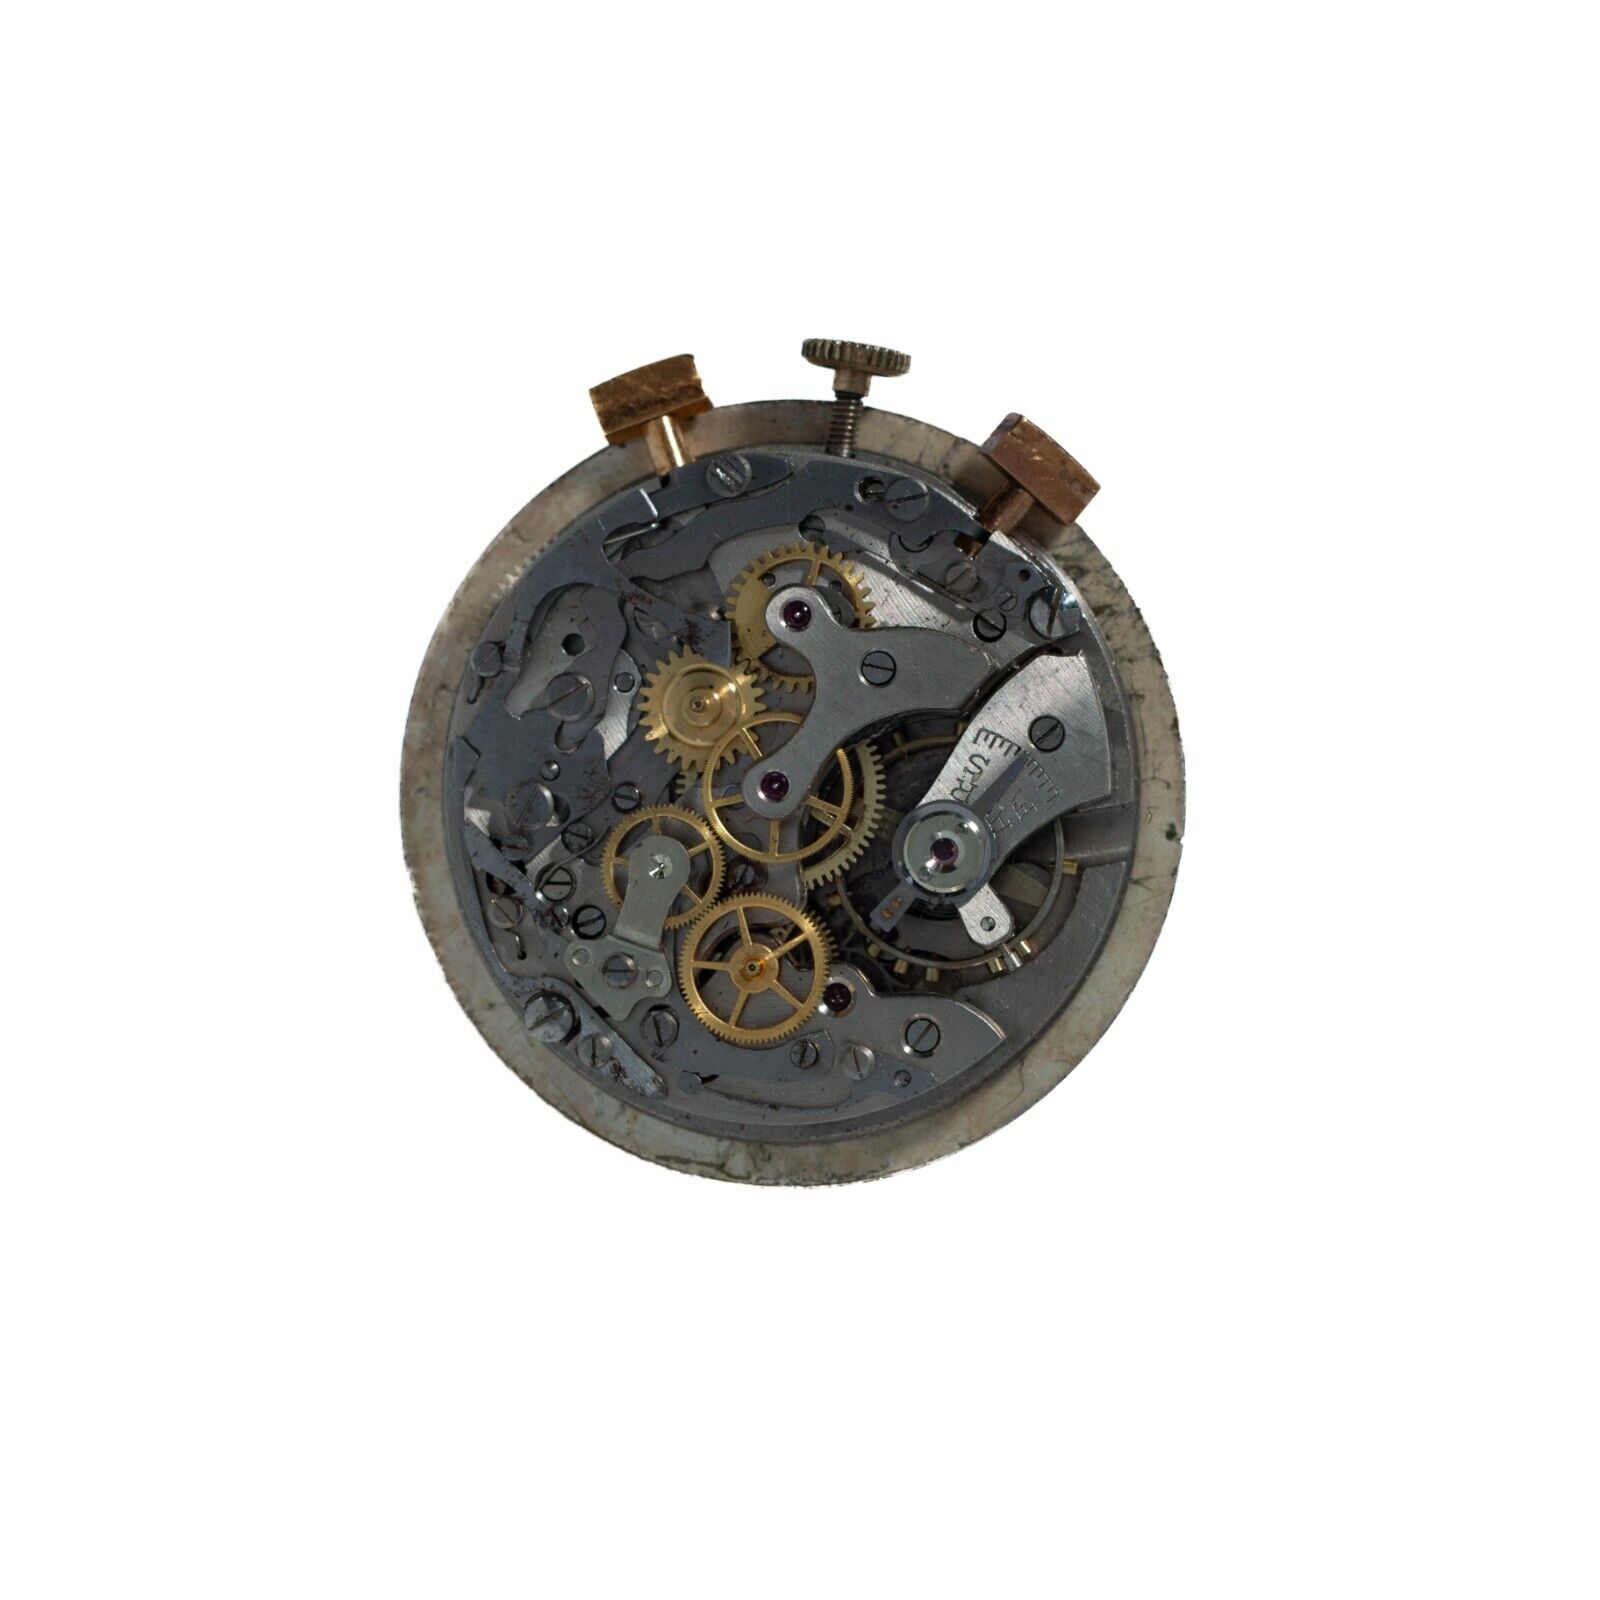 Chronographe Suisse Landeron 51 Swiss 17J Chronograph Manual Wind Watch Movement Gallery Image 0